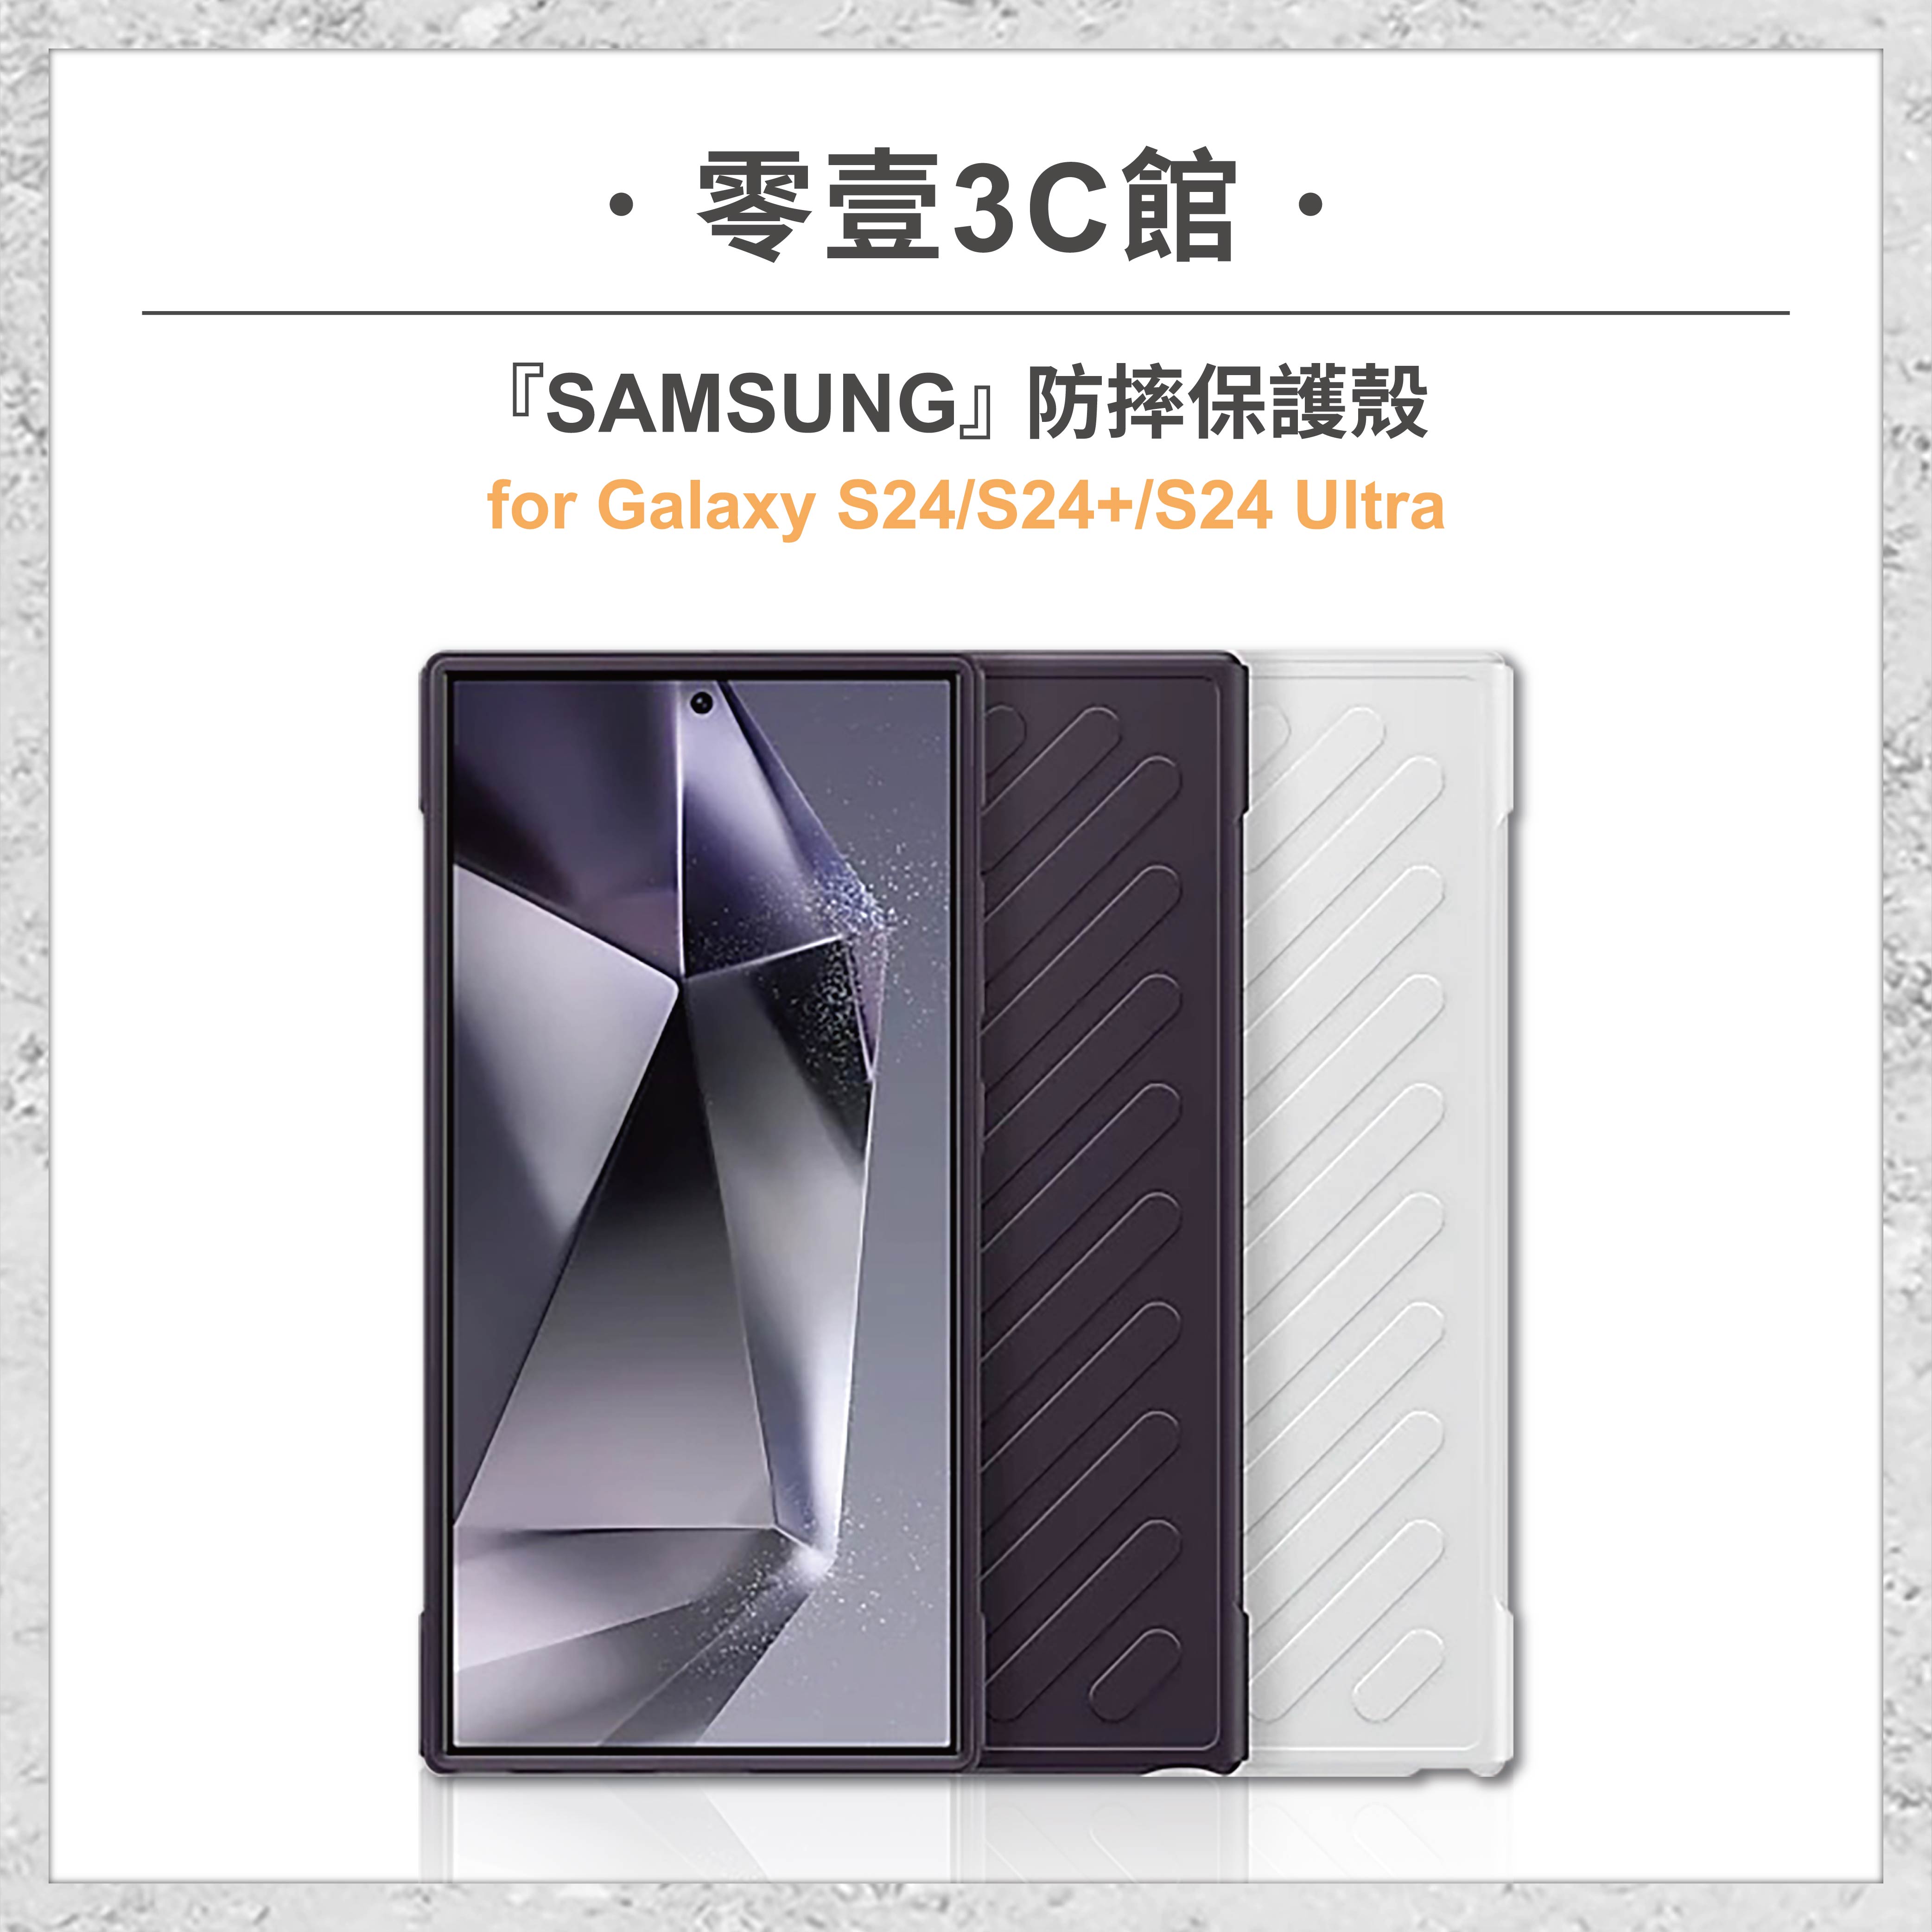 『SAMSUNG』Galaxy S24/S24+/S24 Ultra 防摔保護殼 防摔殼 手機殼